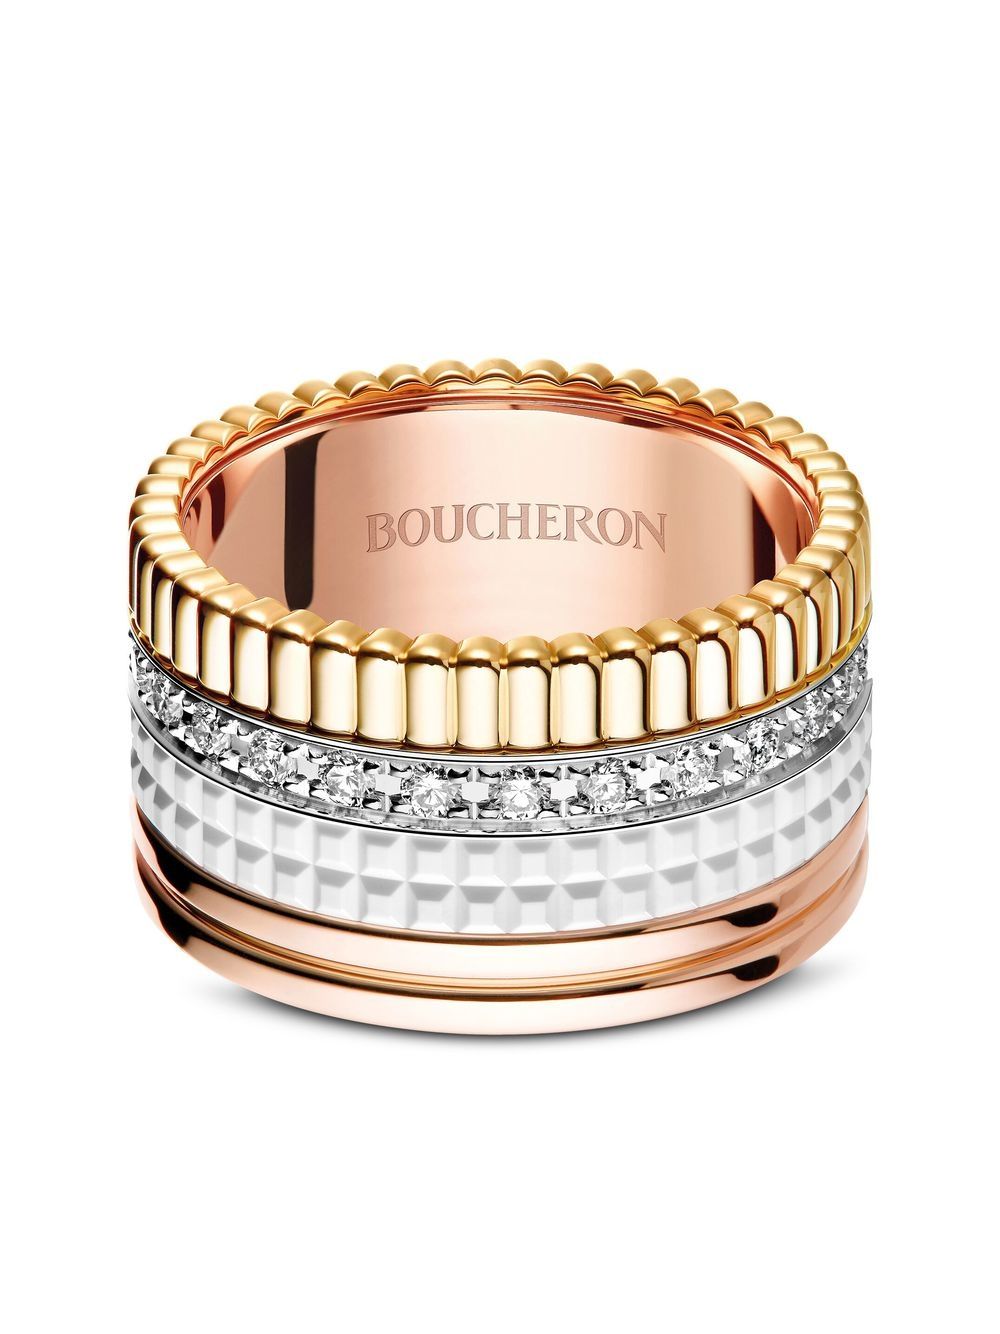 Boucheron 18kt rose, white and yellow gold Quatre White diamond large ring von Boucheron